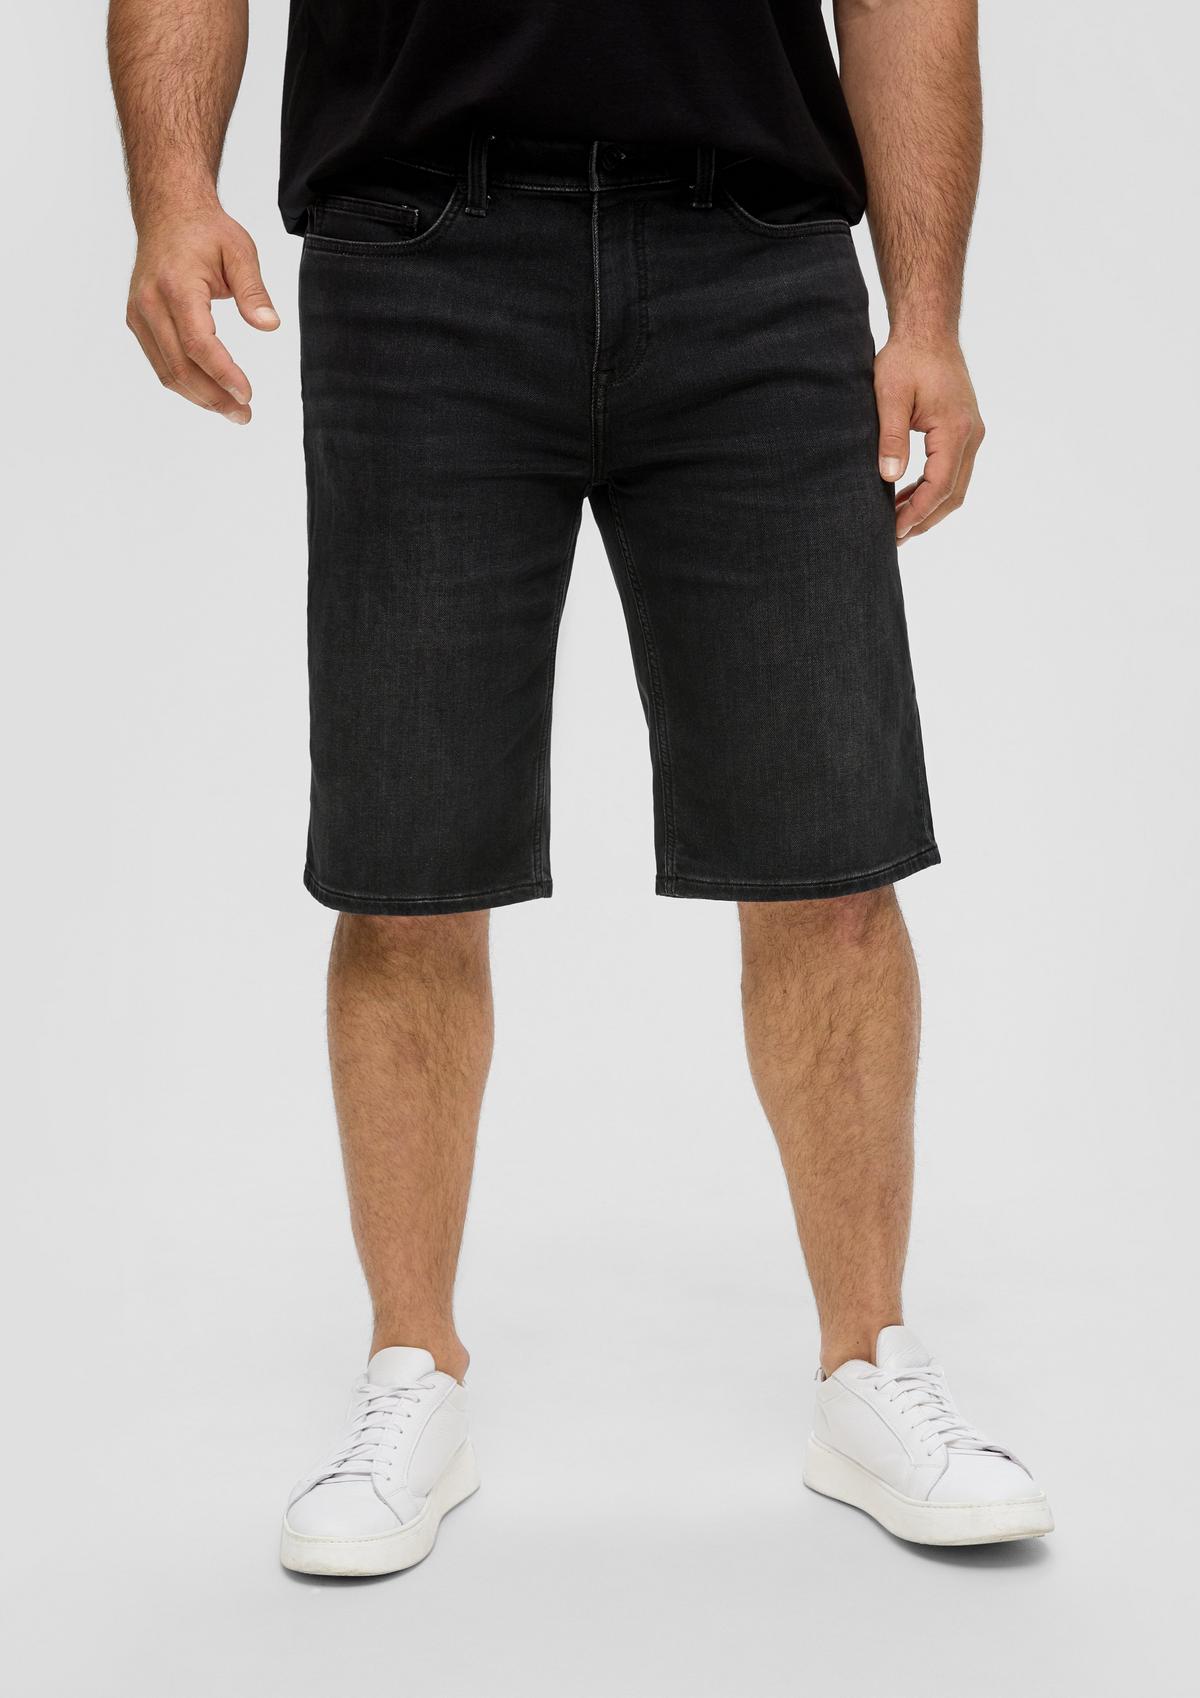 s.Oliver Bermuda Jeans Mauro / Regular Fit / Mid Rise / Straight Leg